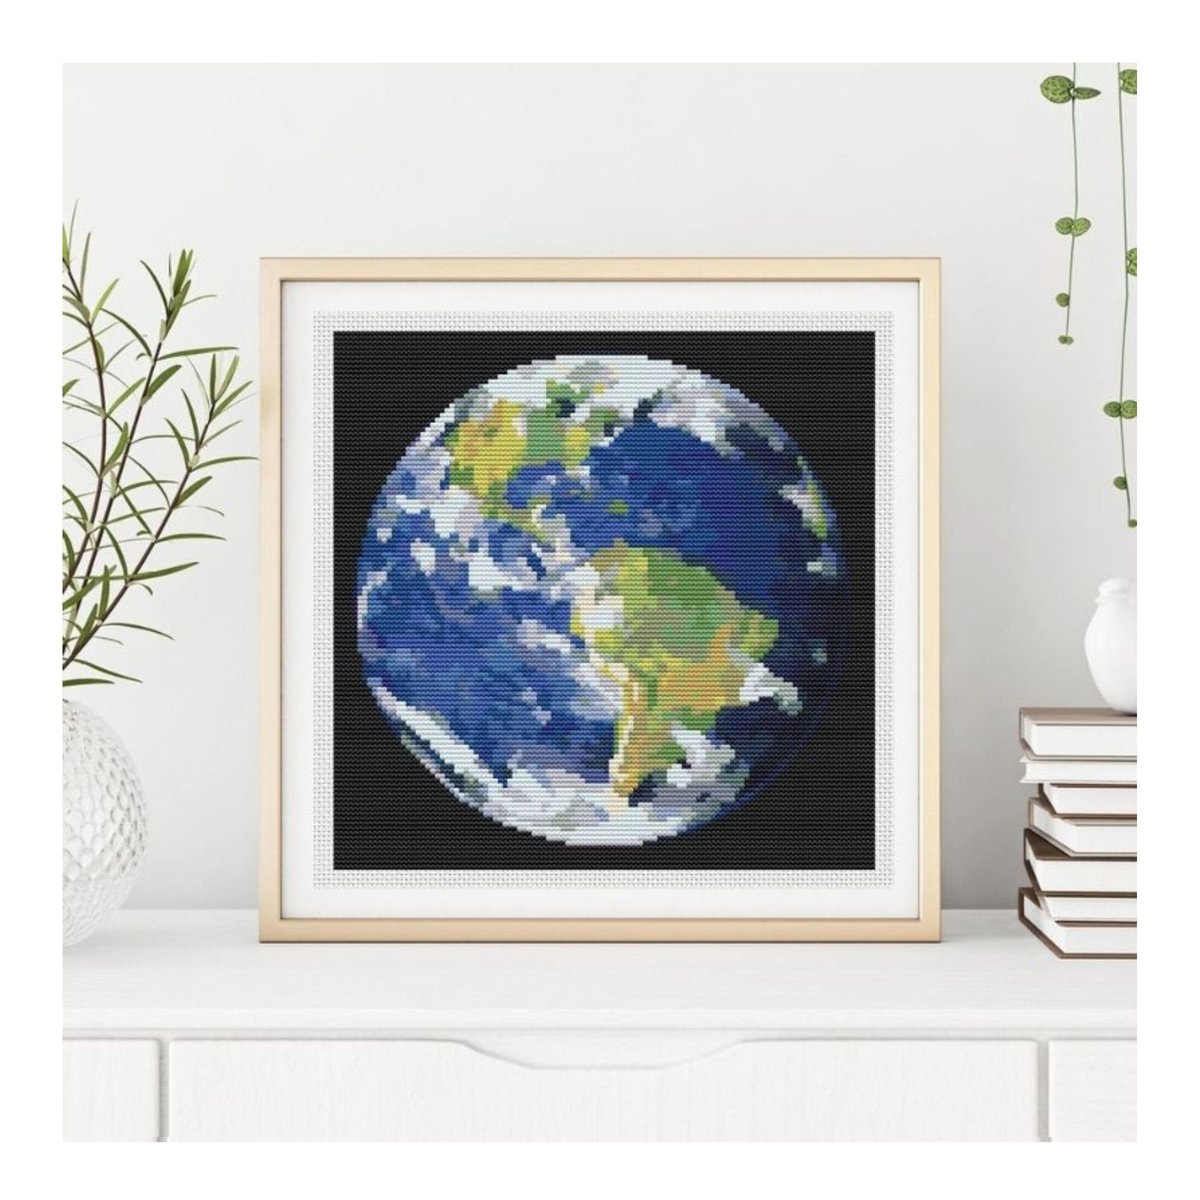 DIY Space Embroidery Kit | Earth Cross Stitch Kit | Planet DIY Craft Kit | Planetary Series etsy.me/44tMqJJ #crossstitch #blue #green #minicrossstitch #crossstitchkit #earthcrossstitch #planetcrossstitch #embroiderykit #spacecrossstitch